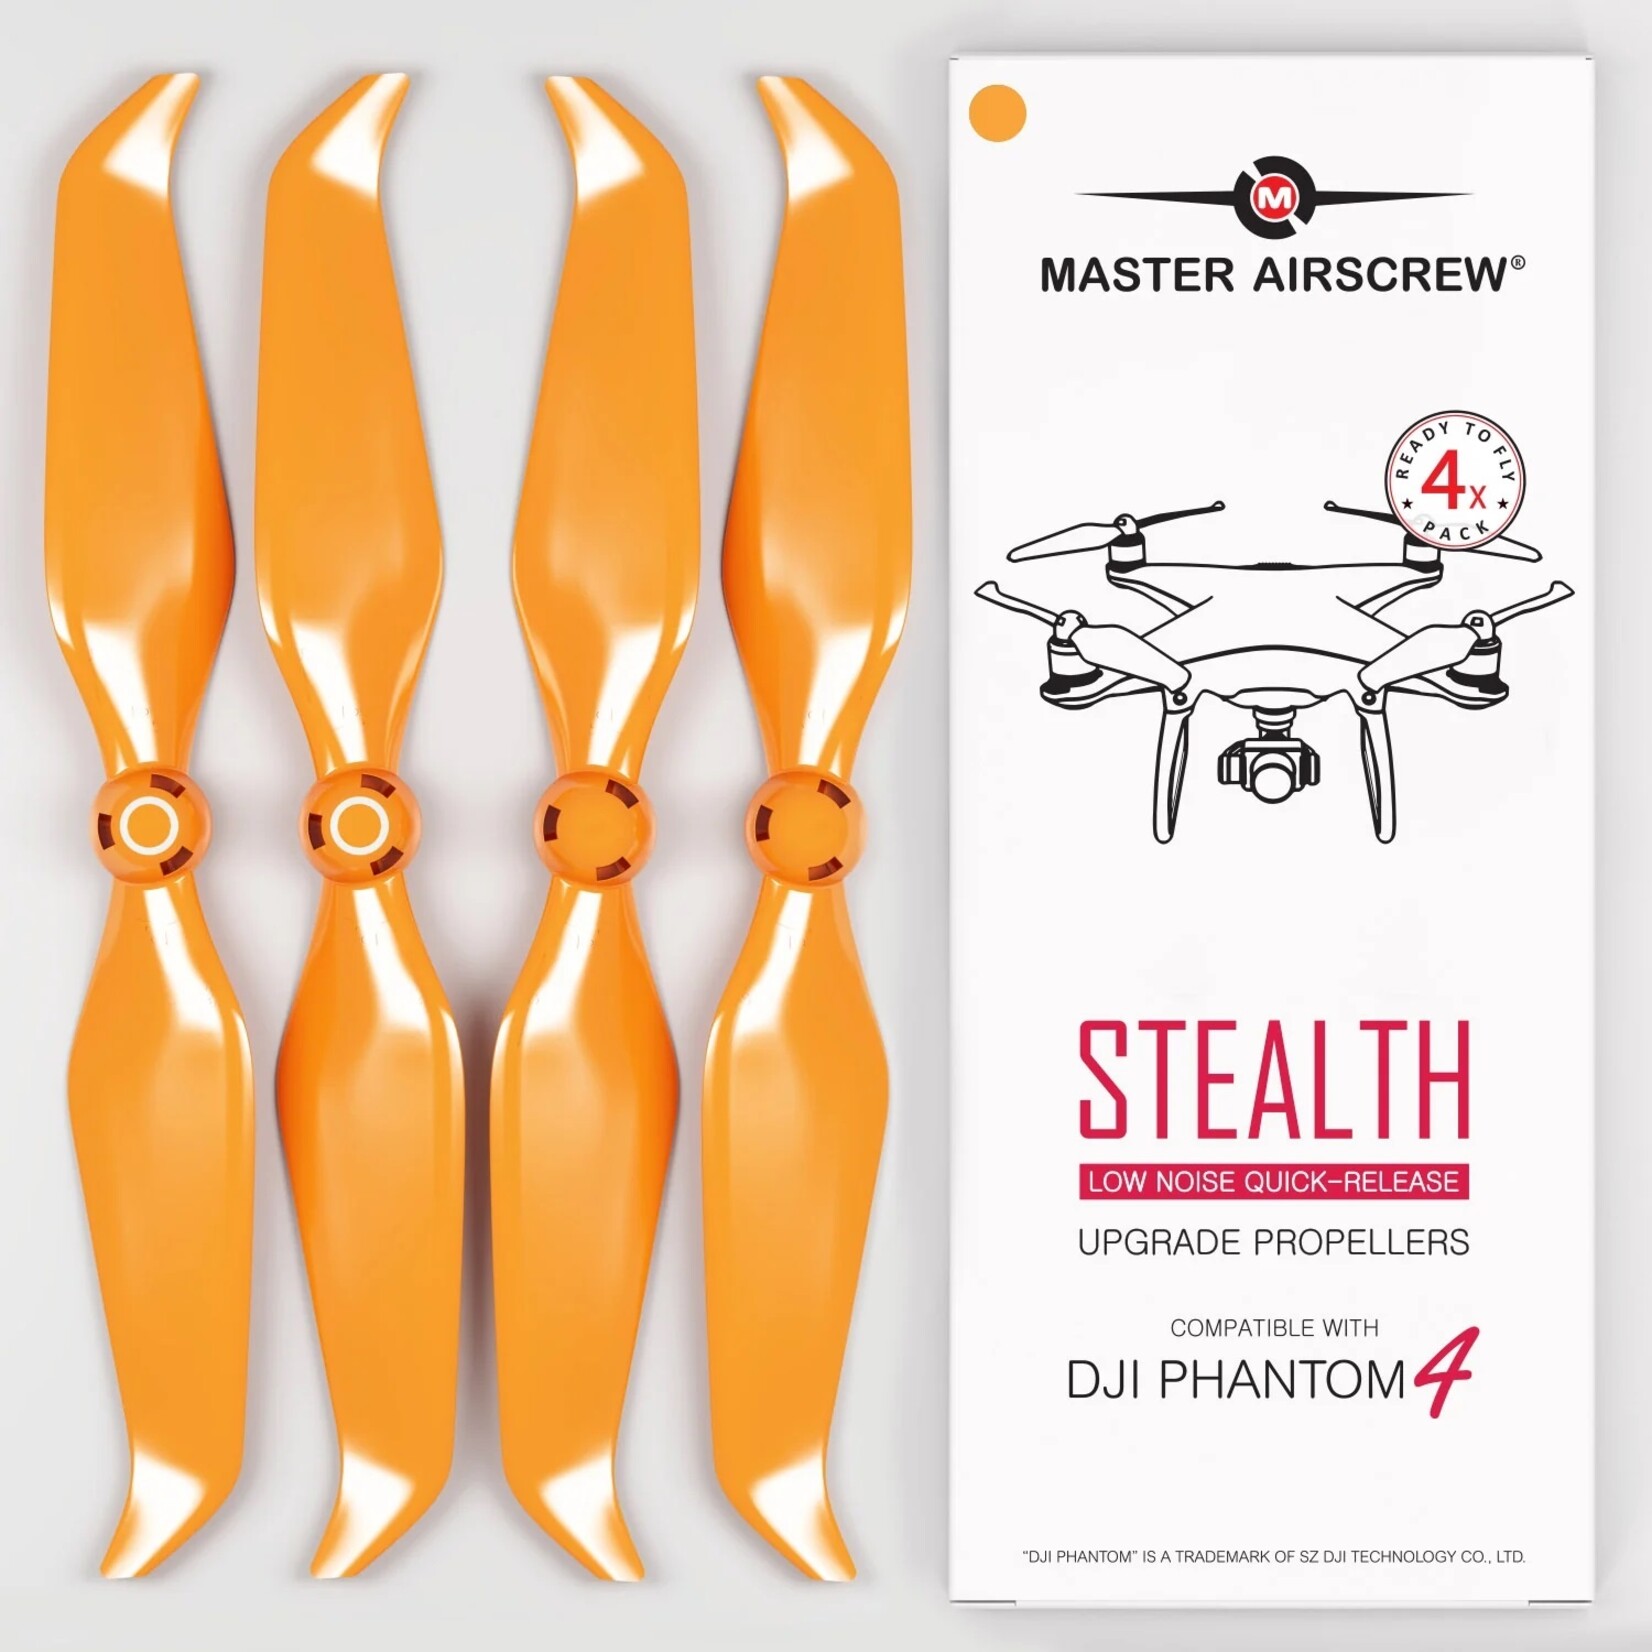 Master Airscrew DJI Phantom 4 STEALTH Propellers (Orange) (4) #MAPHS9557S04